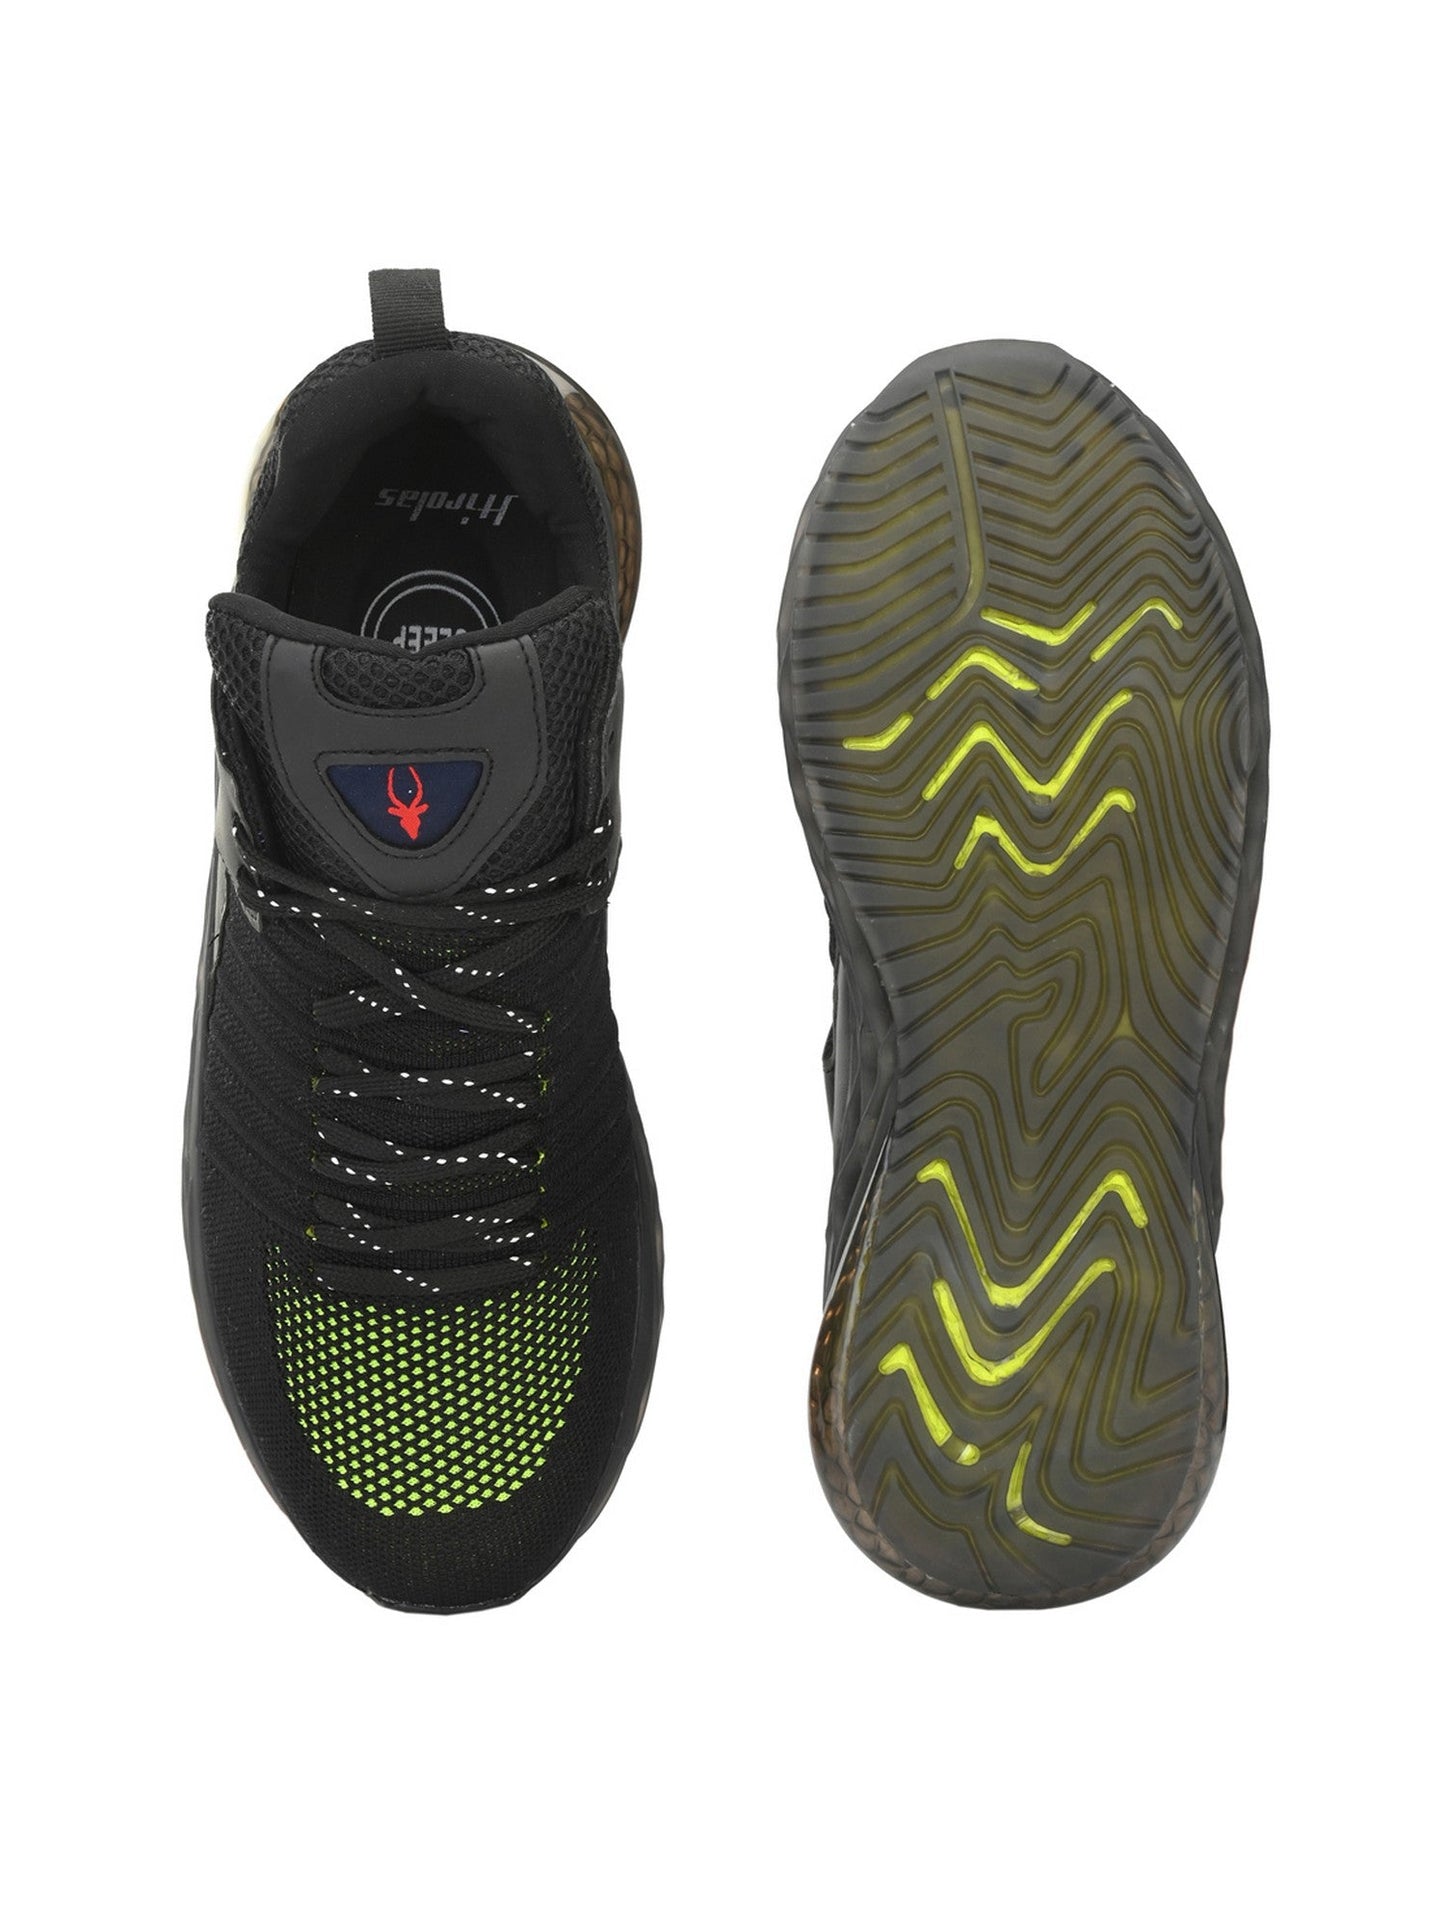 Hirolas® Men's Black/P.Green Elite Shock Absorbing Walking running Fitness Athletic Training Gym Ankle Fashion Lace Up Sneaker Sport Shoes (HRLMP03BLK)